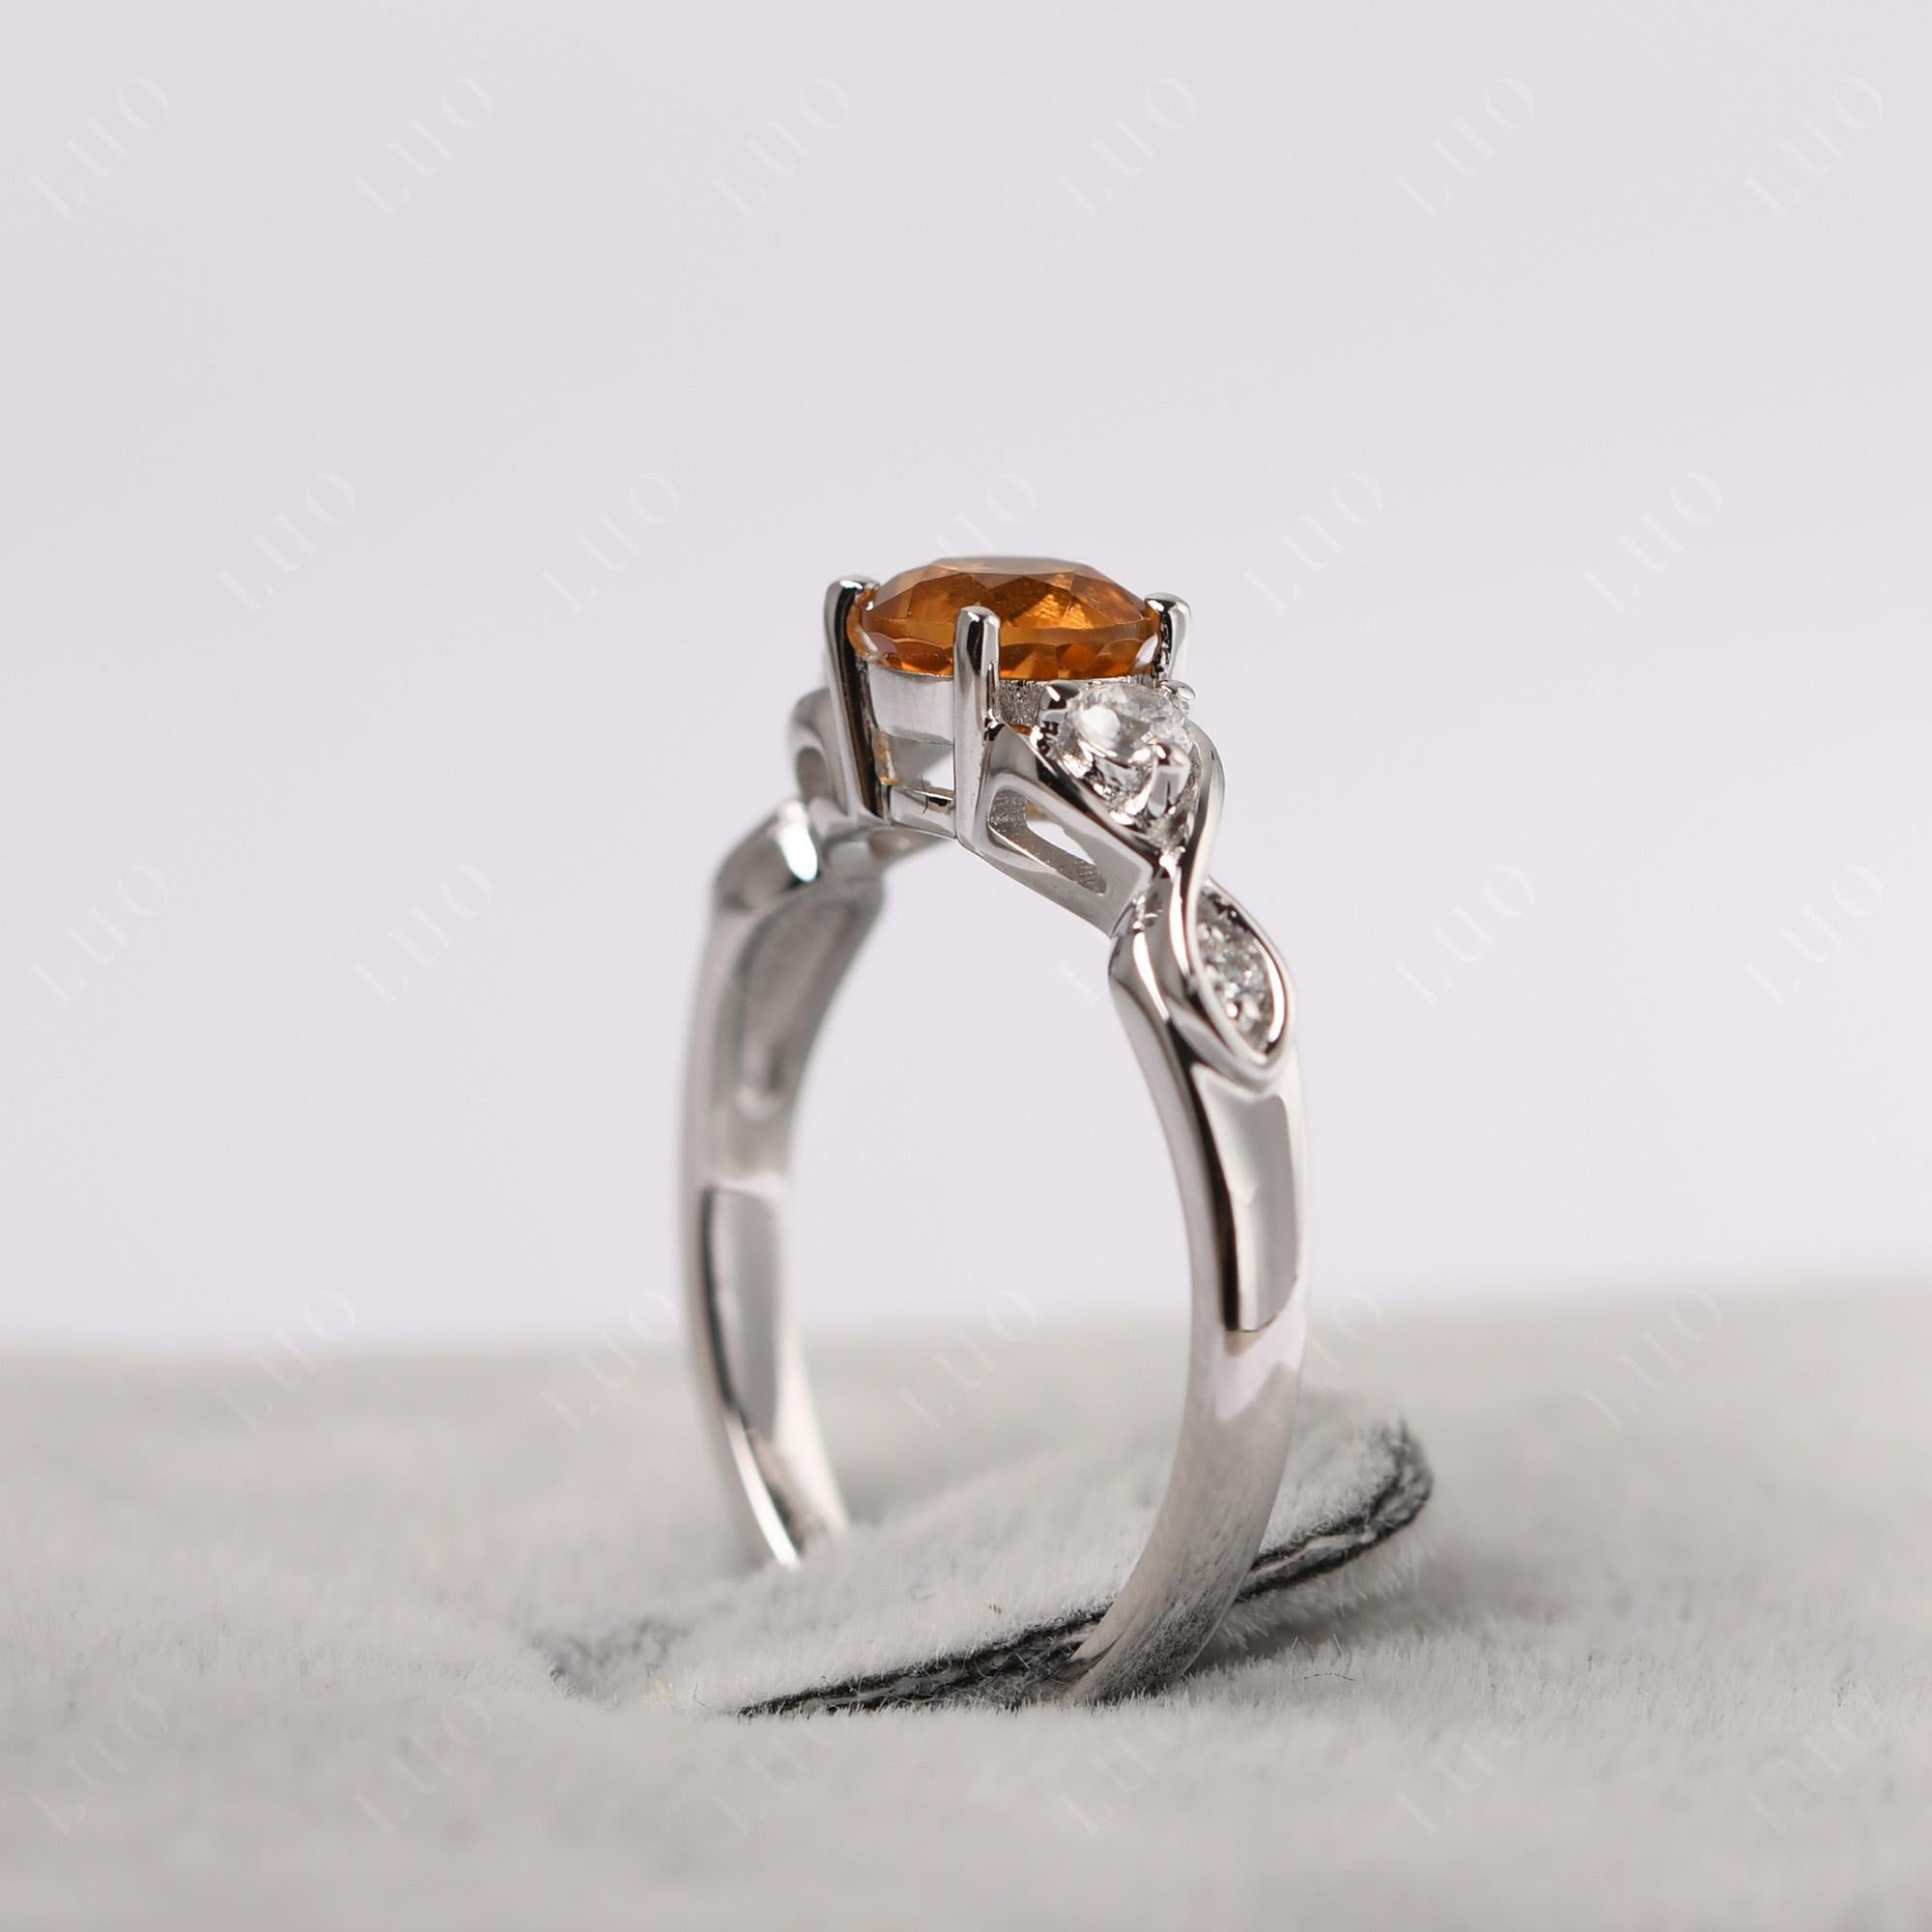 Round Citrine Ring Wedding Ring - LUO Jewelry